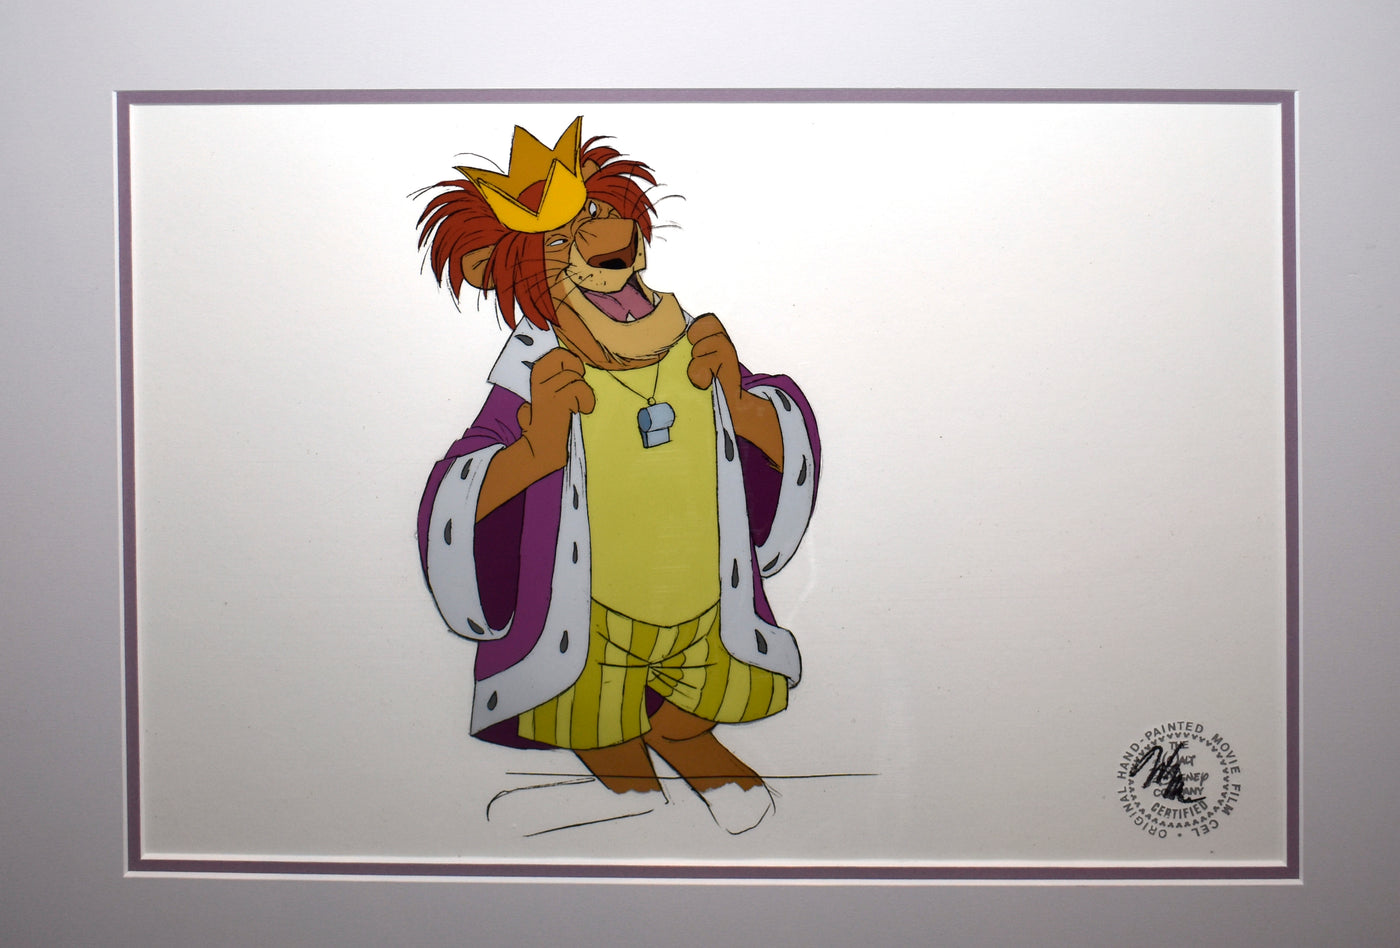 Original Walt Disney Production Cel from Bedknob and Broomsticks featuring King Leonidas